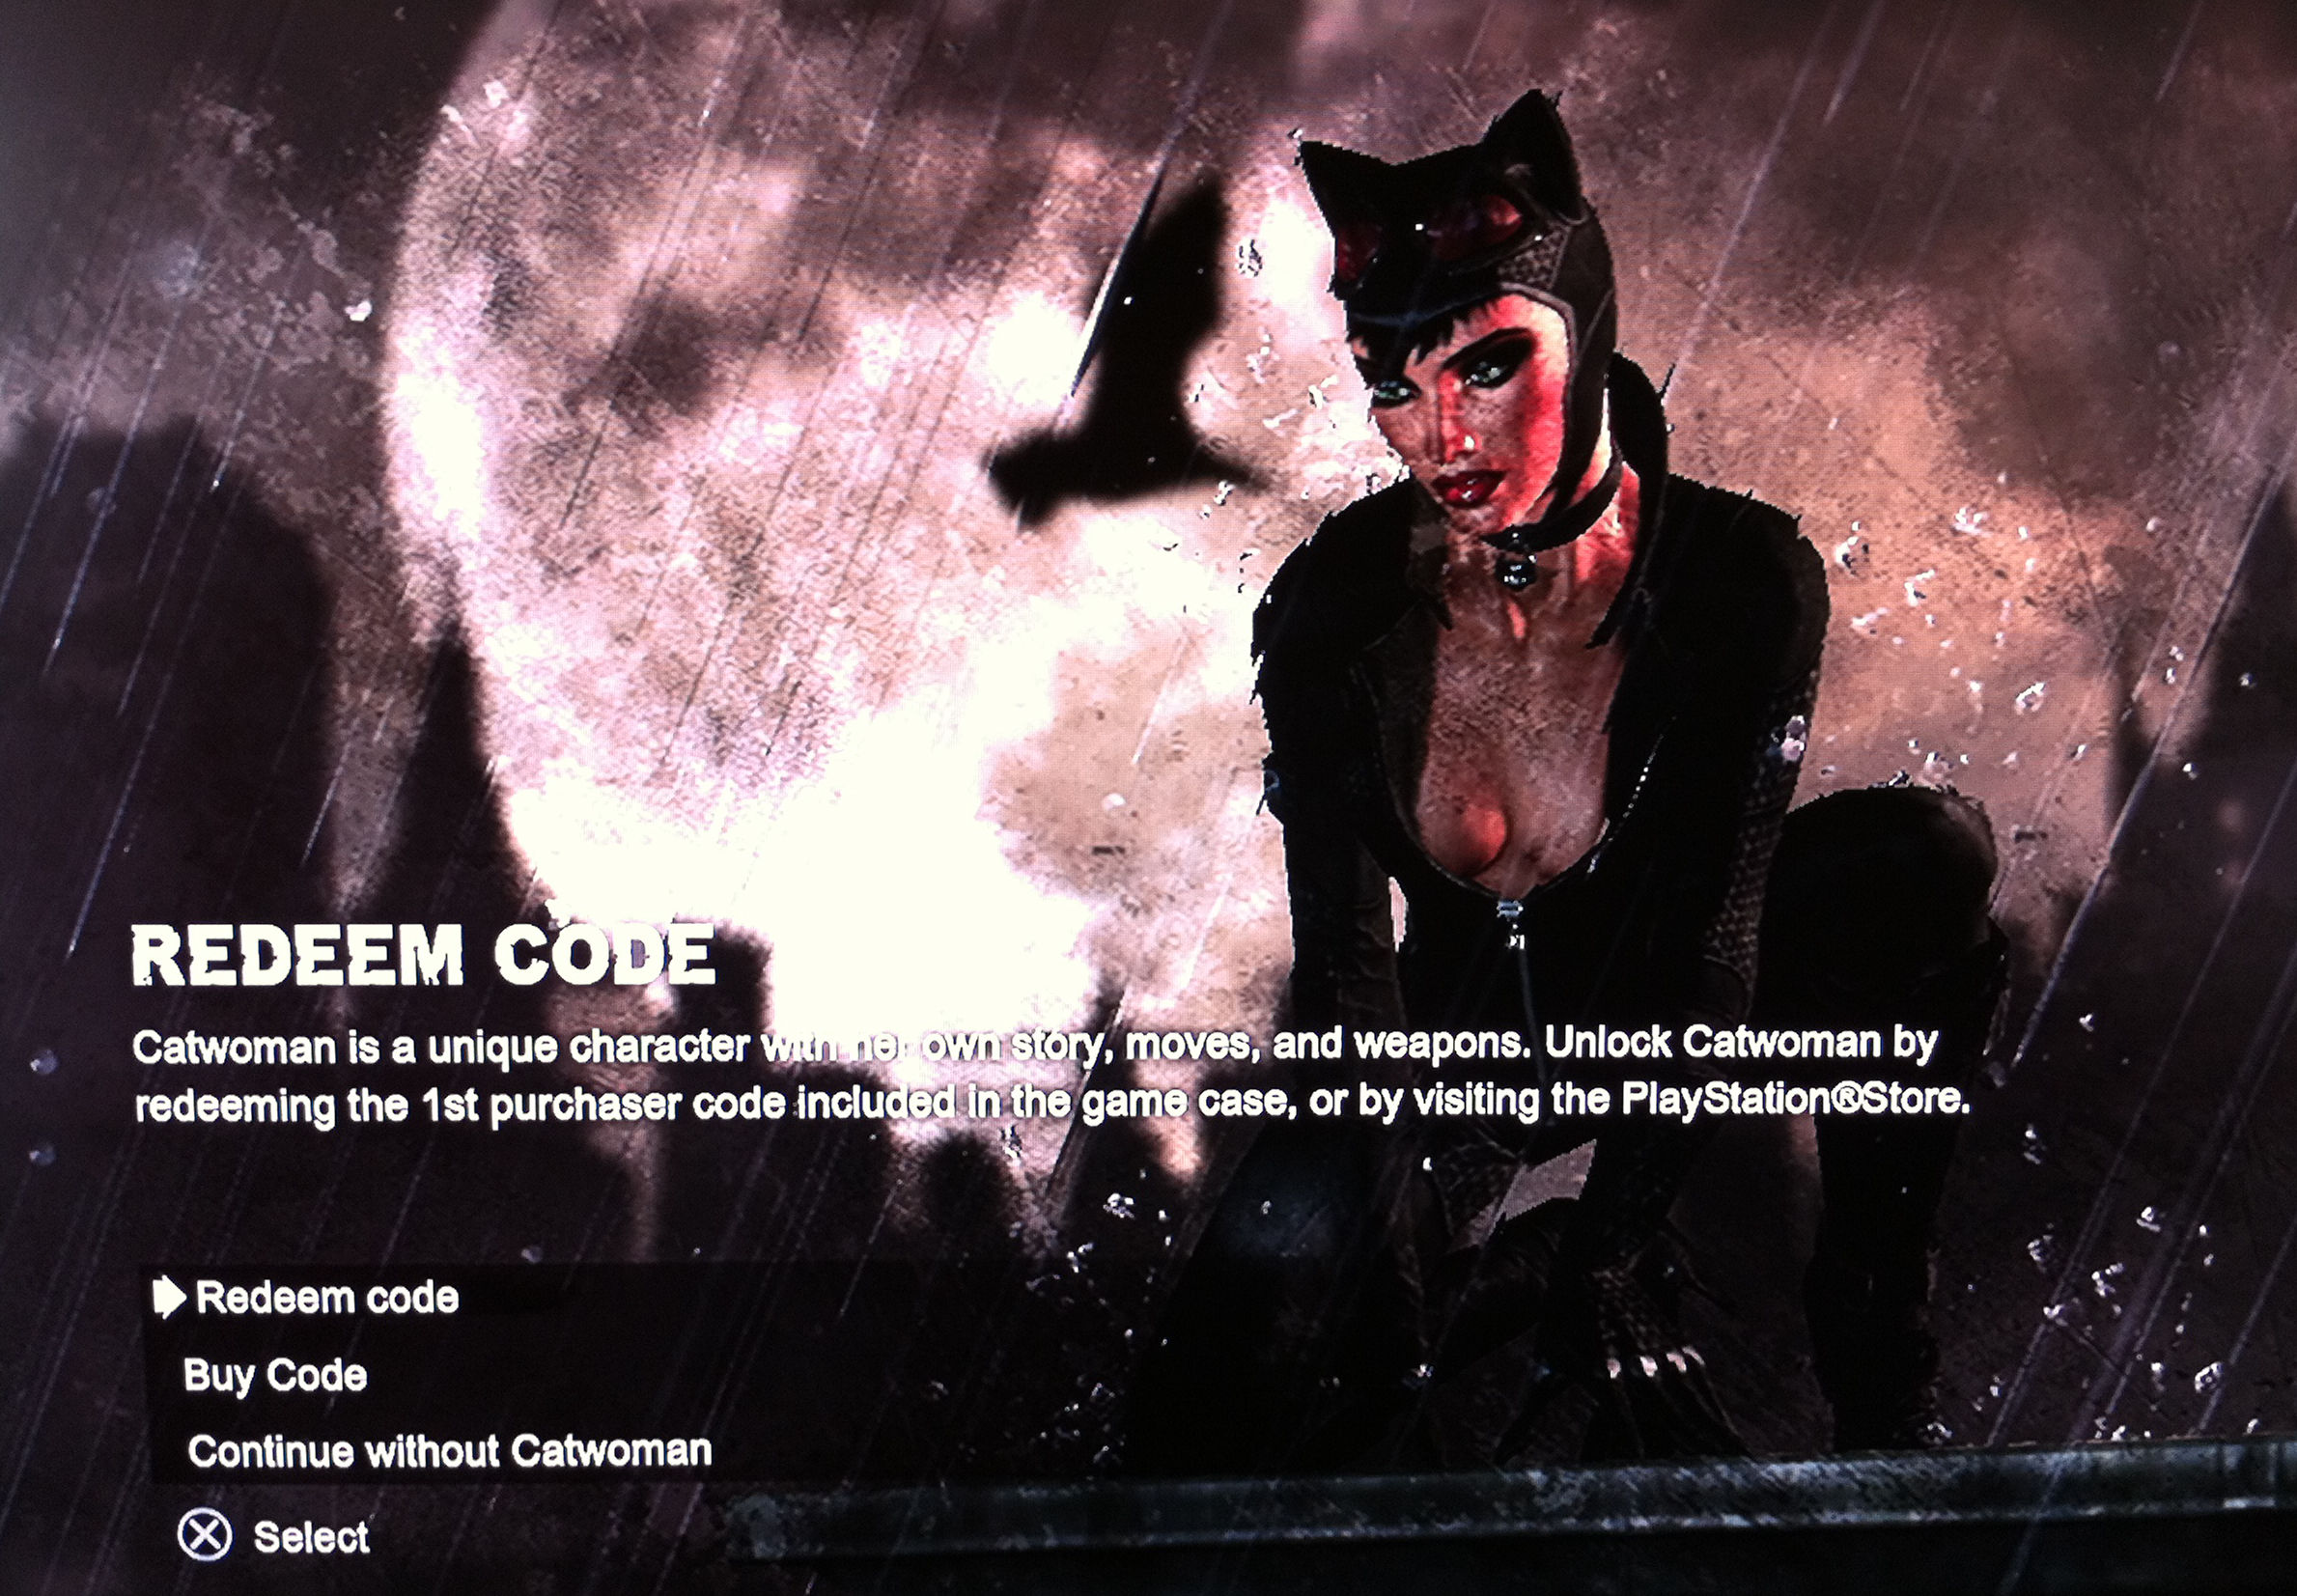 No code, no Catwoman.